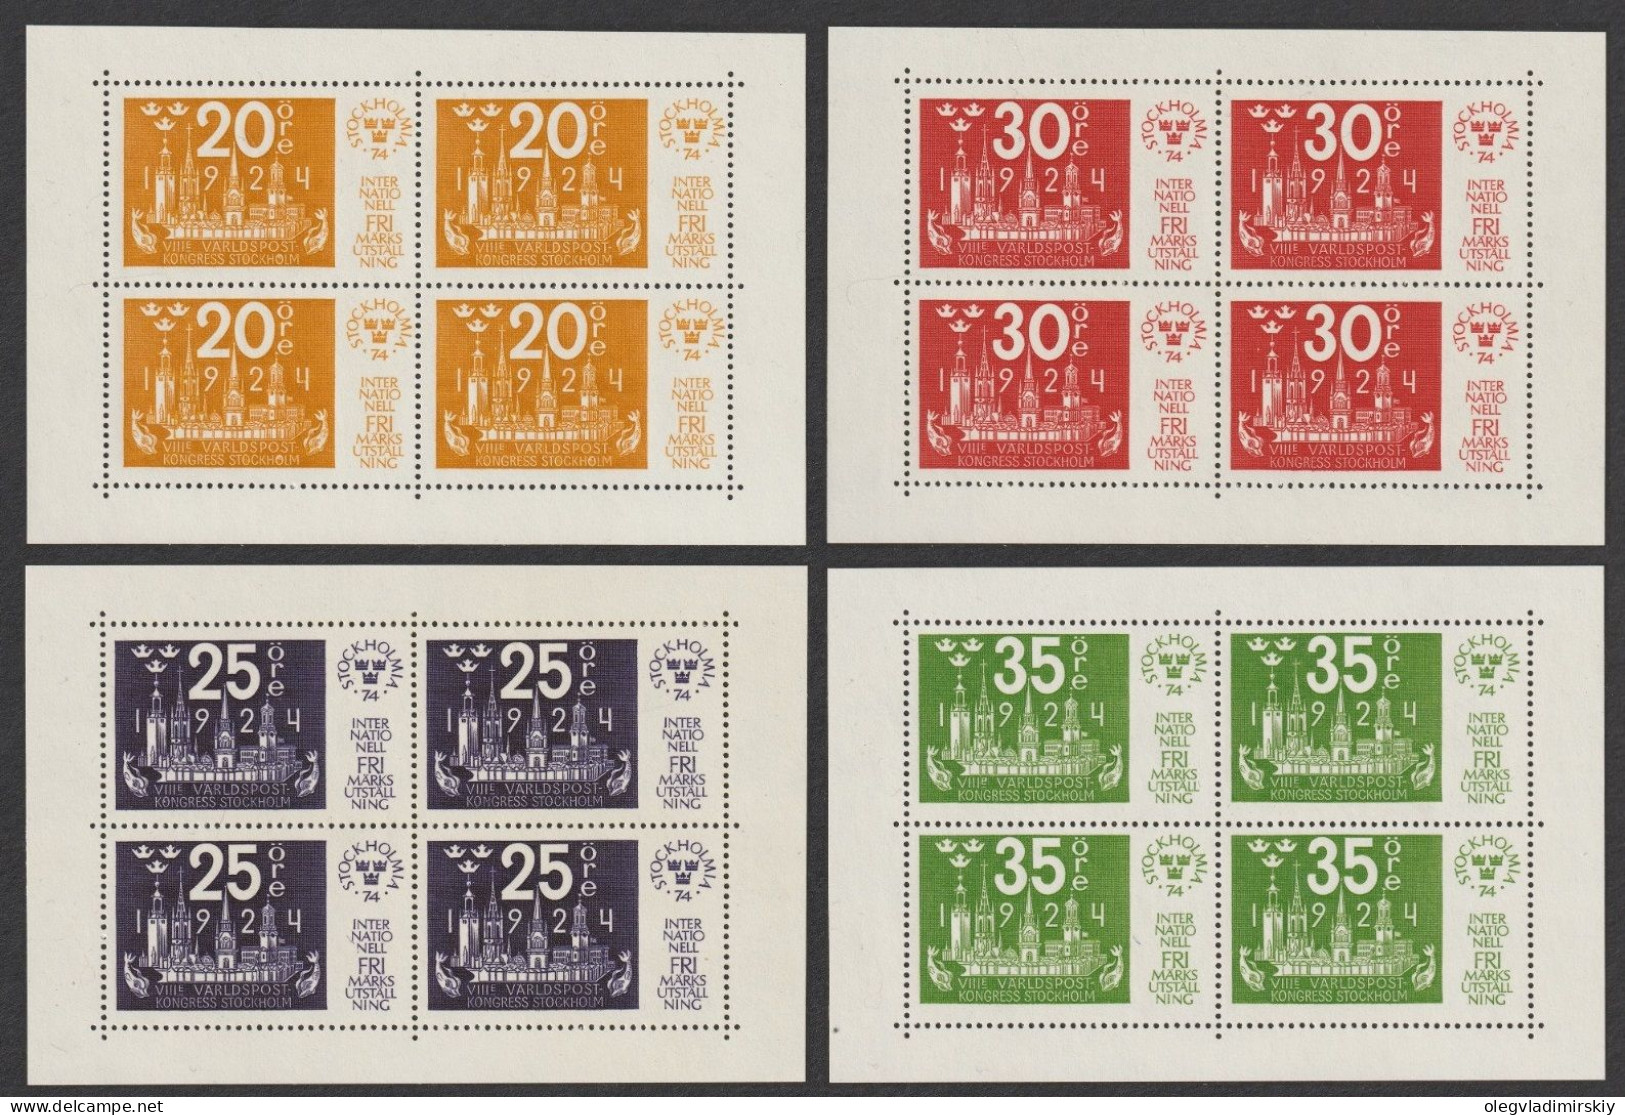 Sweden Suède Suède 1974 STOCKHOLMIA 74 International Stamp Exhibition Set Of 4 Miniature Sheets MNH - Blocks & Kleinbögen